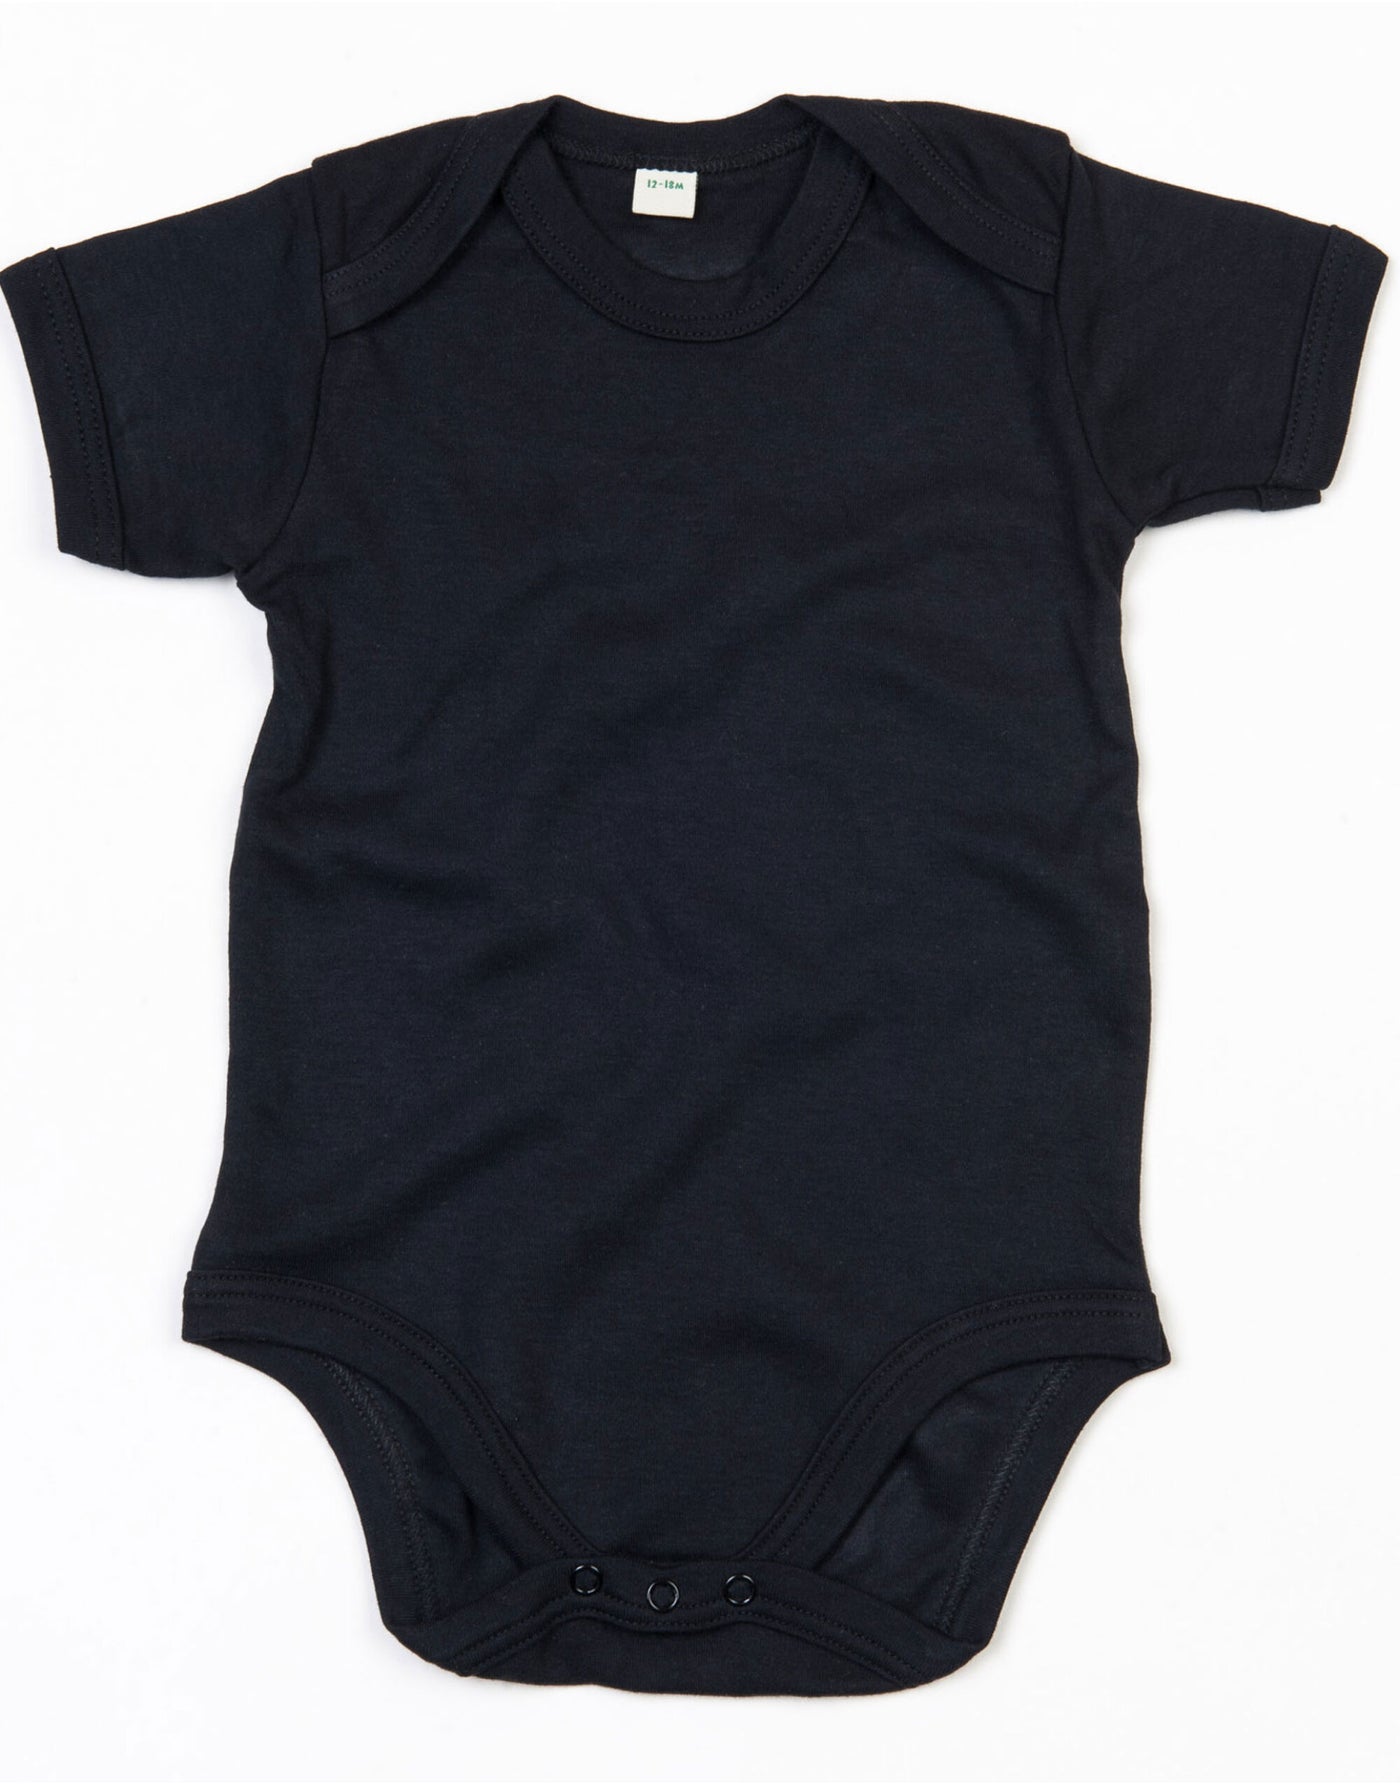 Black Baby Bodysuit 